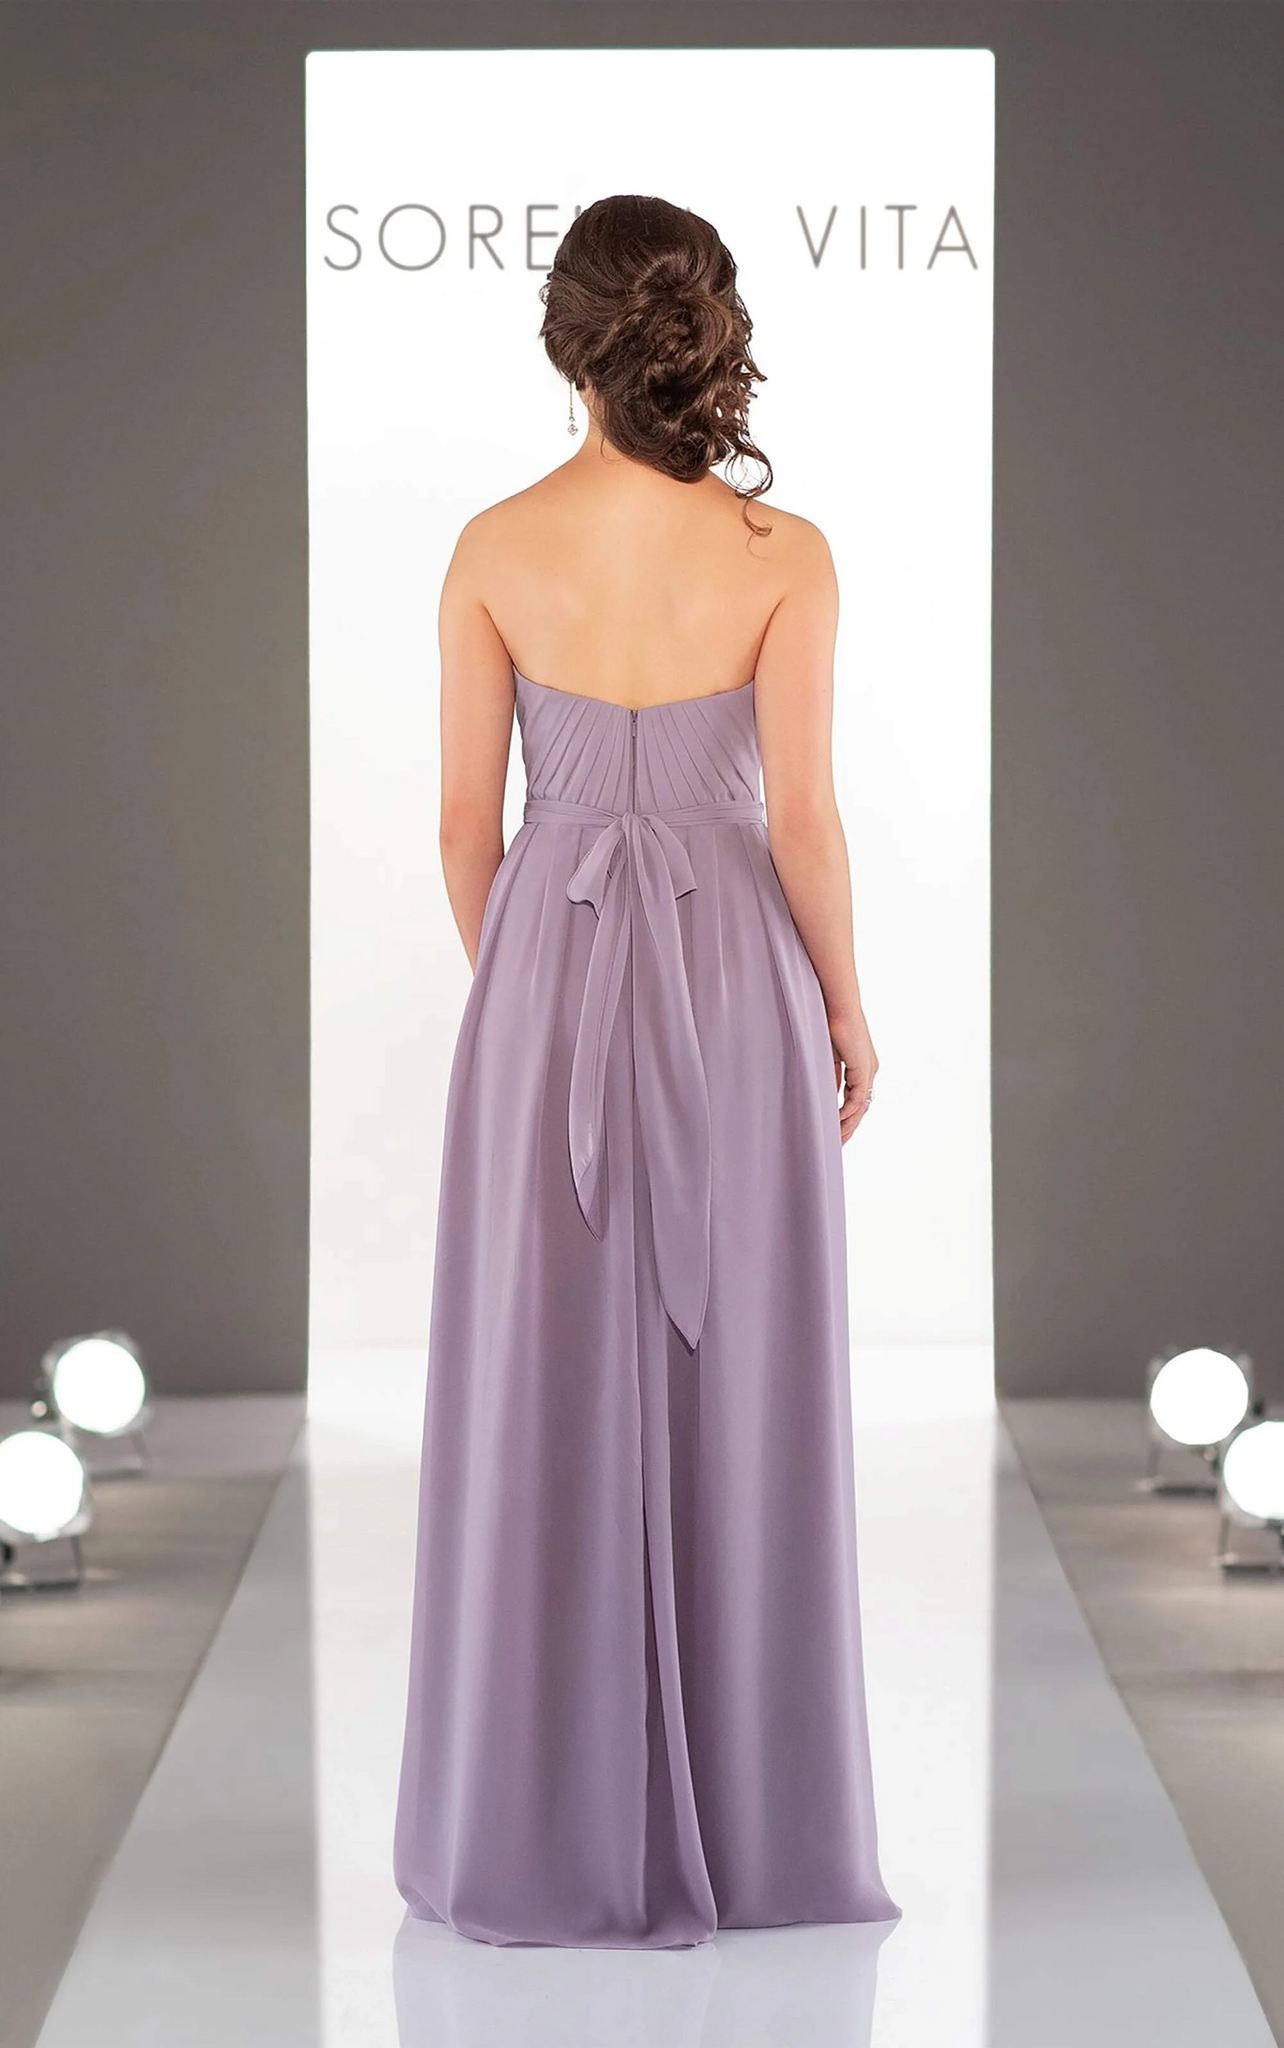 Sorella Vita Dress Style 9114 (Dusty Lavender-Size 22) Prom, Ball., Black-tie, Bridesmaid, Pageant